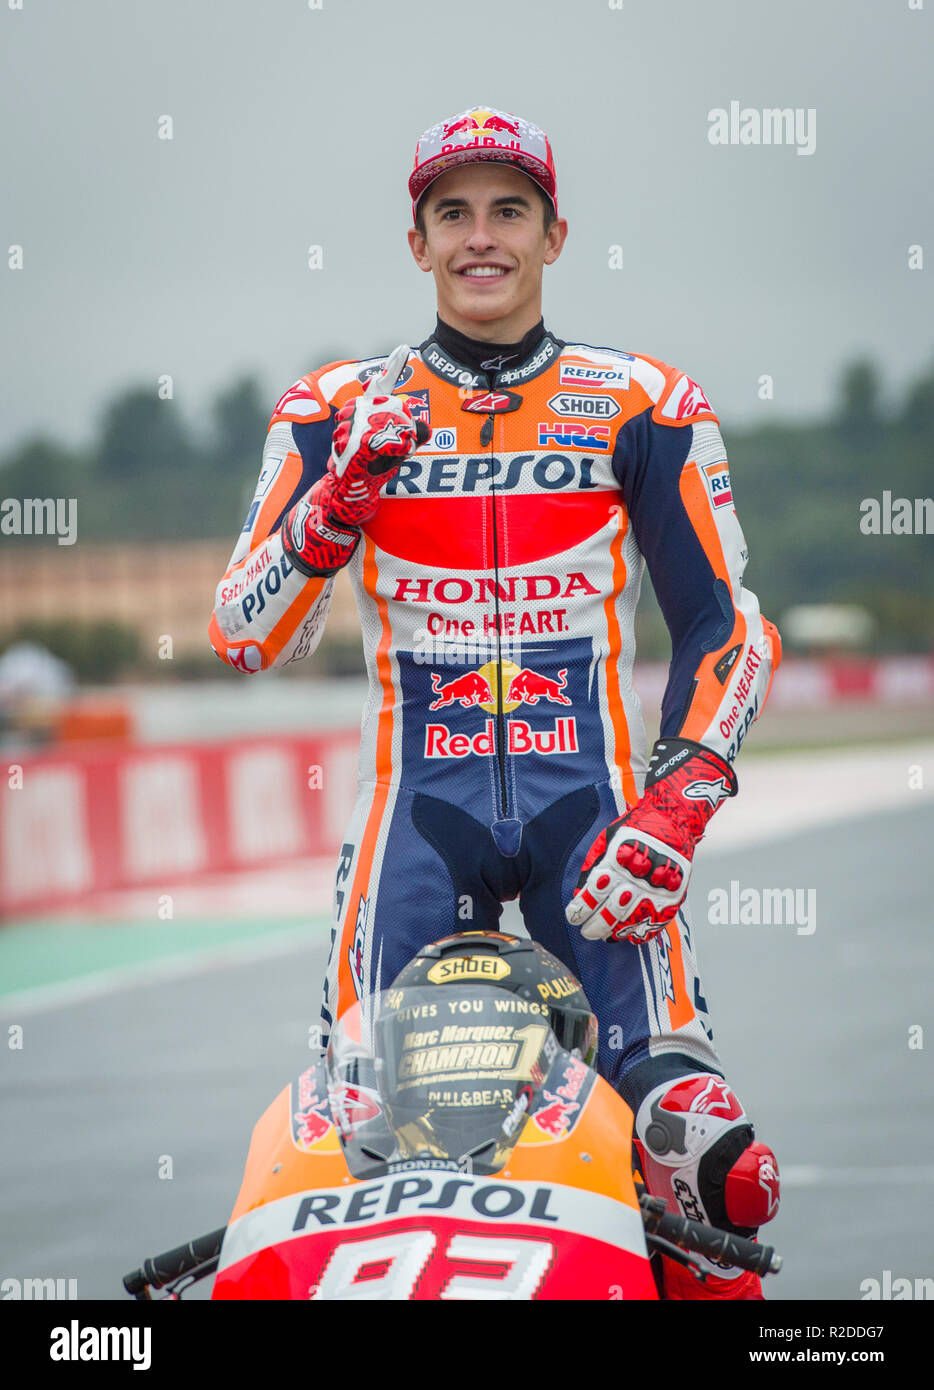 Cheste,Valence. Espagne.18 Novembre 2018. Week-GP Moto GP. Marc Marquez moto  GP rider du Team Repsol Honda est le Champion du Monde Moto GP 2018 .  Credit : rosdemora/Alamy Live News Photo Stock -